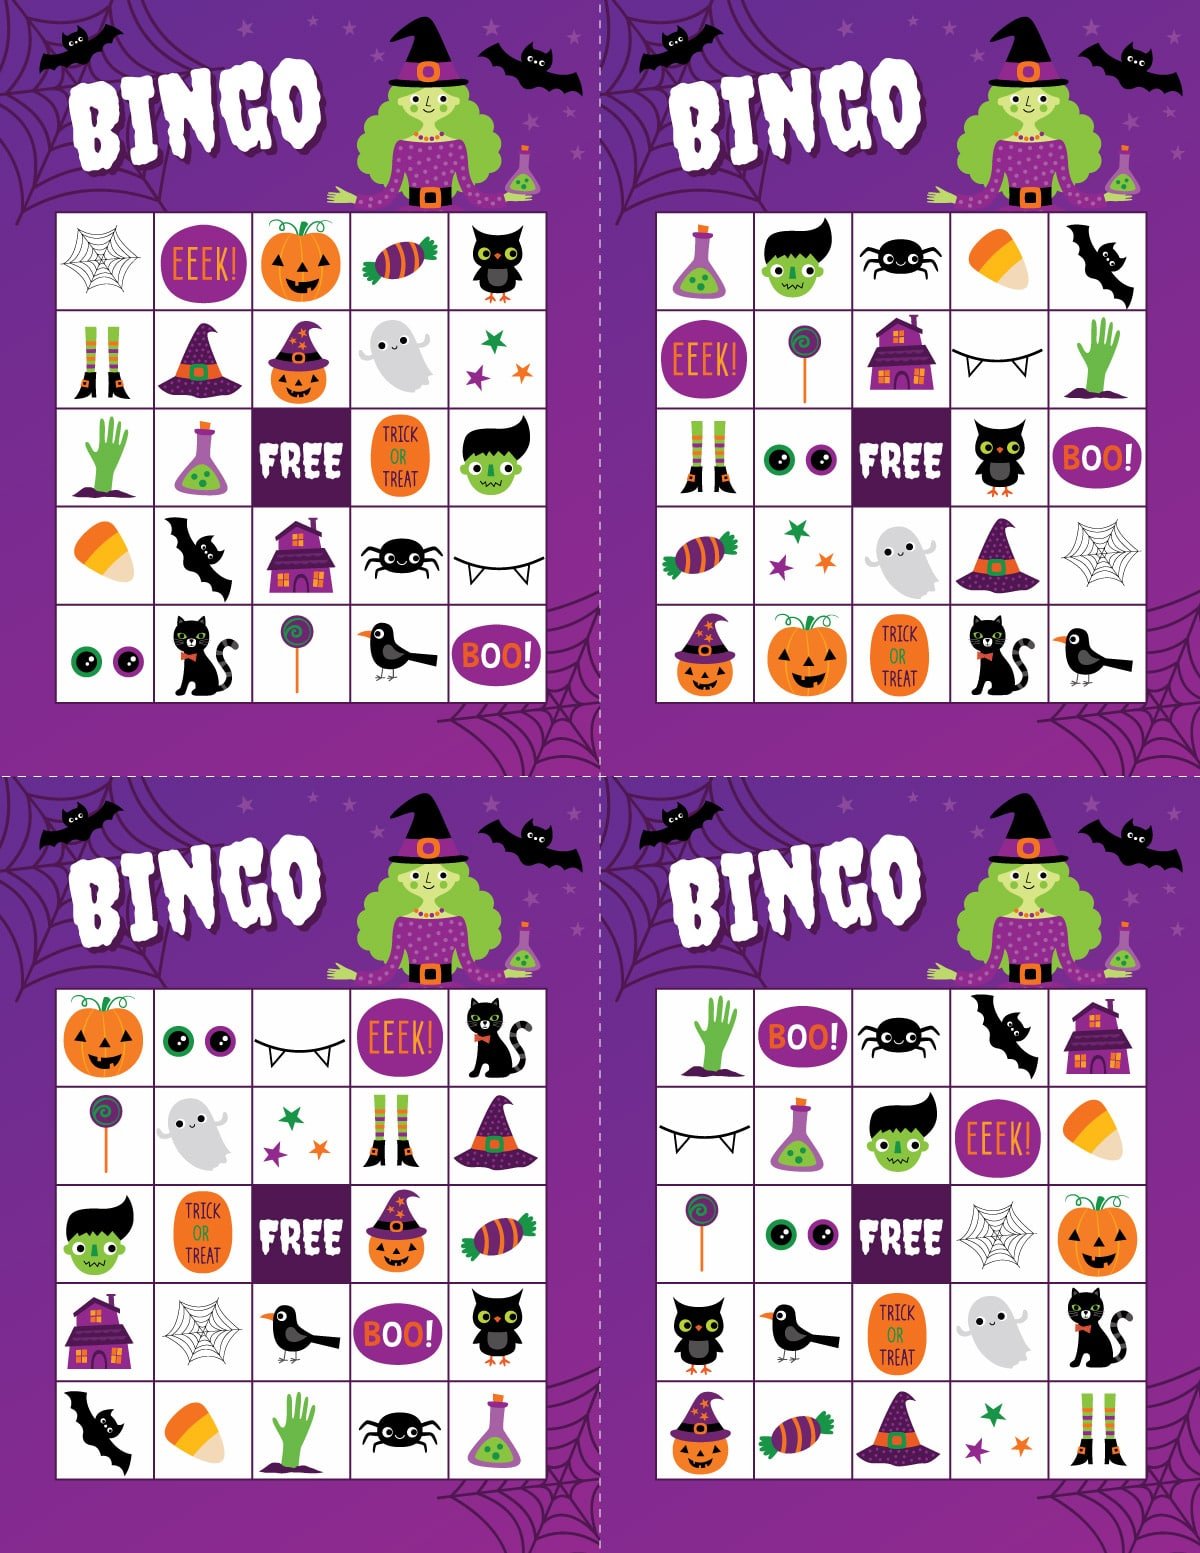 bingo-cards-to-print-free-printable-bingo-card-2018-07-05